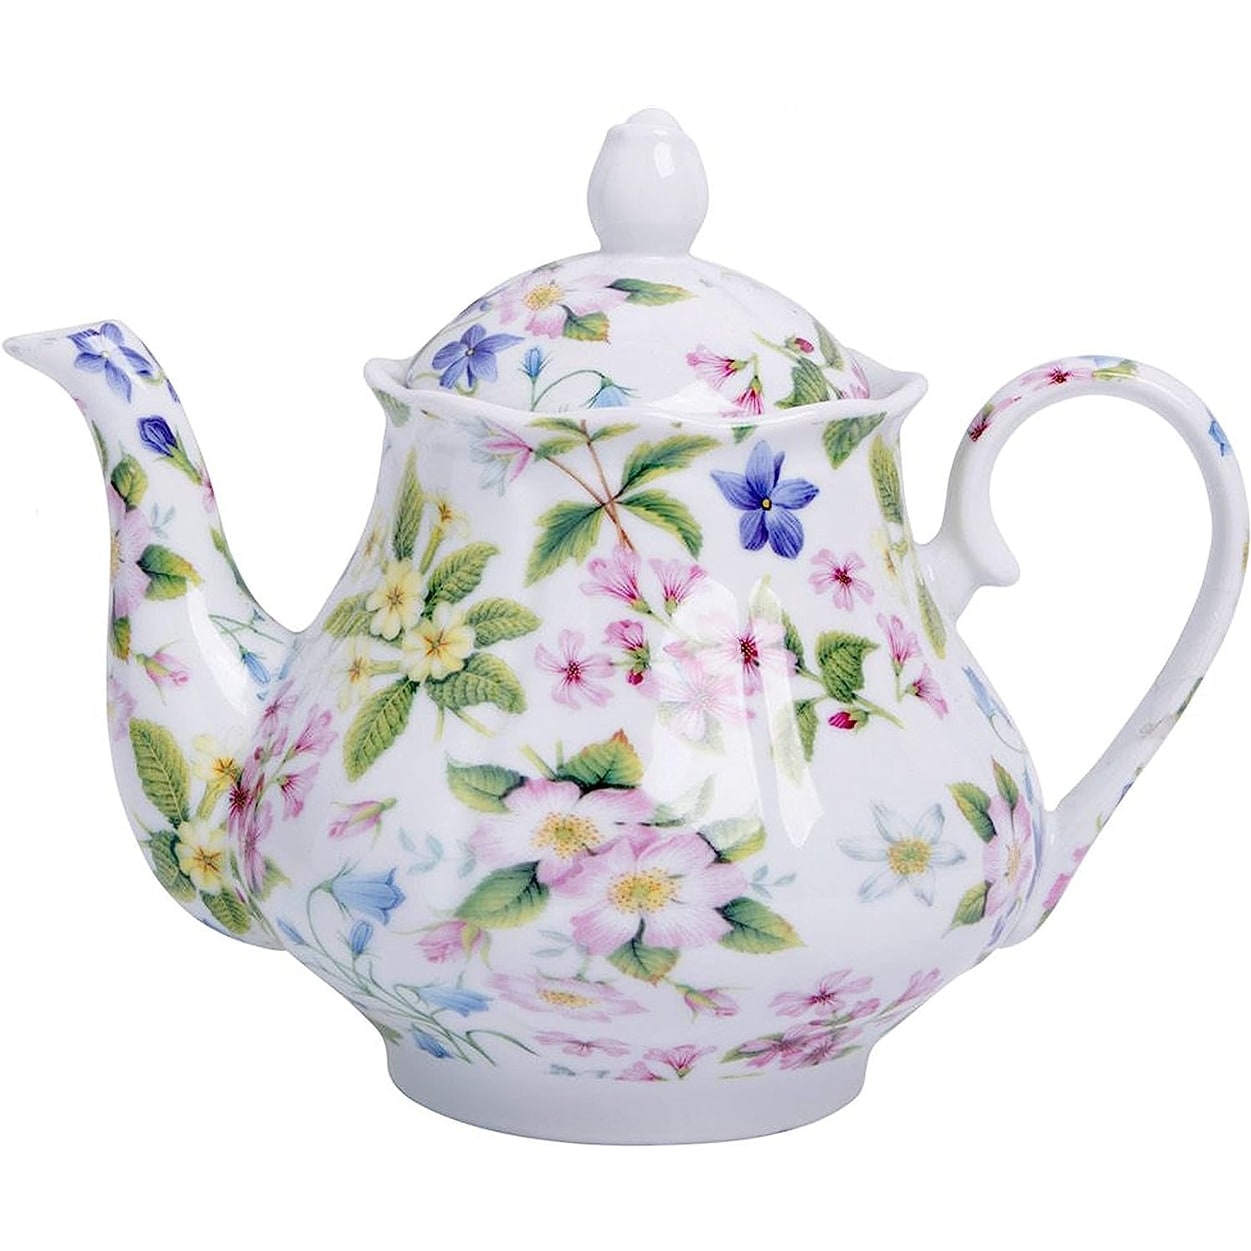 https://ak1.ostkcdn.com/images/products/is/images/direct/da2edc73934d27b0dc50d07bdaf3269168502e86/European-Style-Ceramic-Teapot-Coffee-Pot-Water-Pot-Porcelain-Vintage-Gift-Tea-Pot.jpg